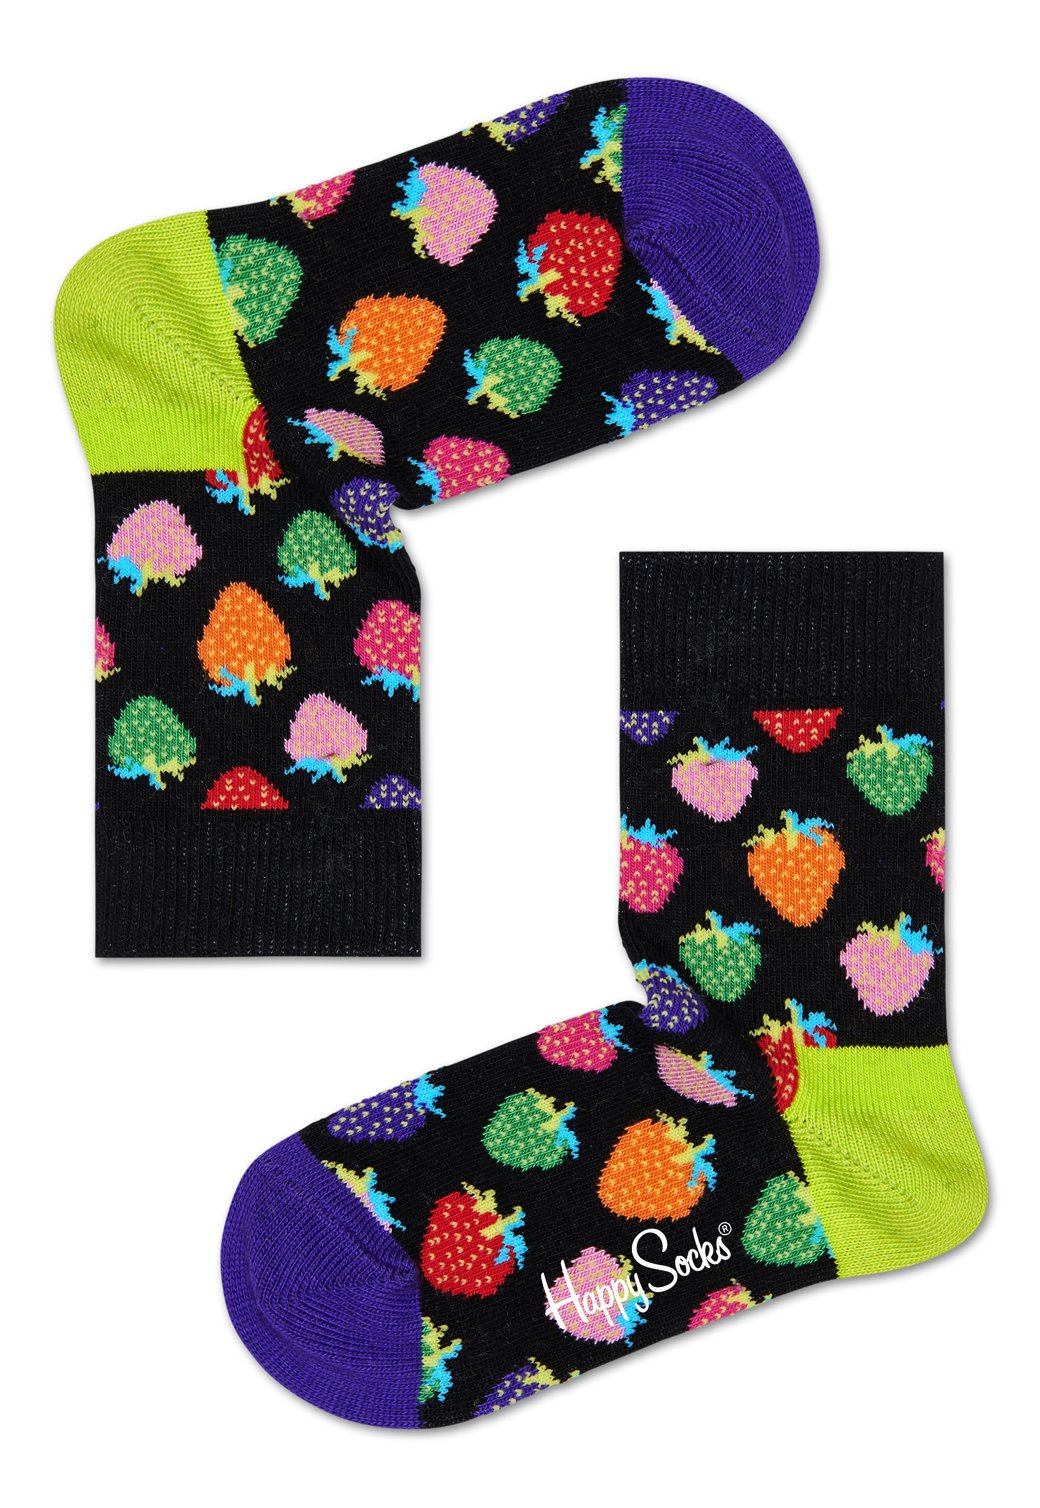 Black מארז גרביים בהדפס צבעוני לילדים | 5 זוגות HAPPY SOCKS